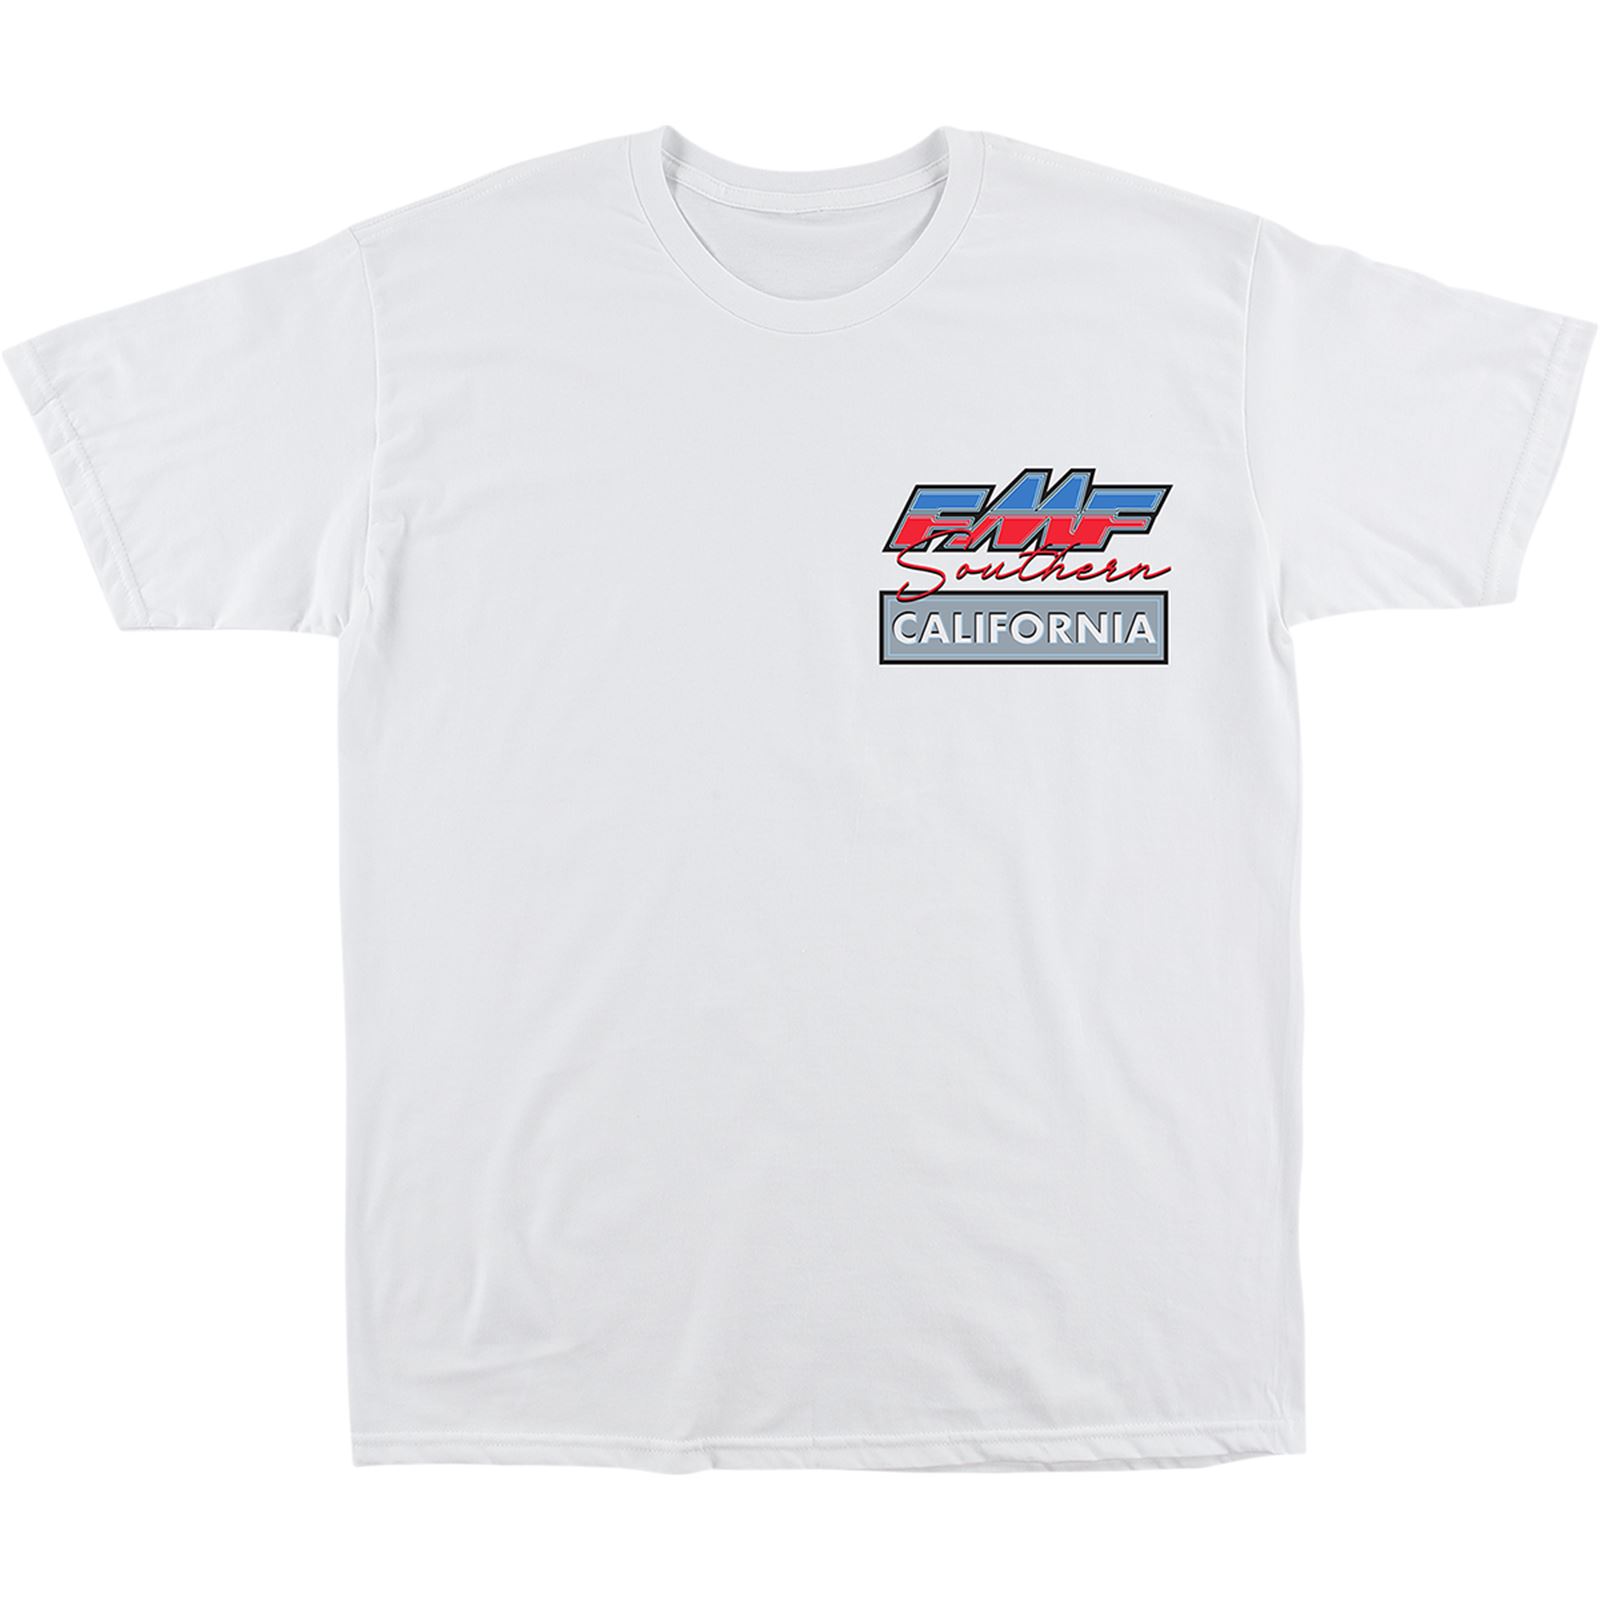 FMF Racing Evolution T-Shirt - White - Small